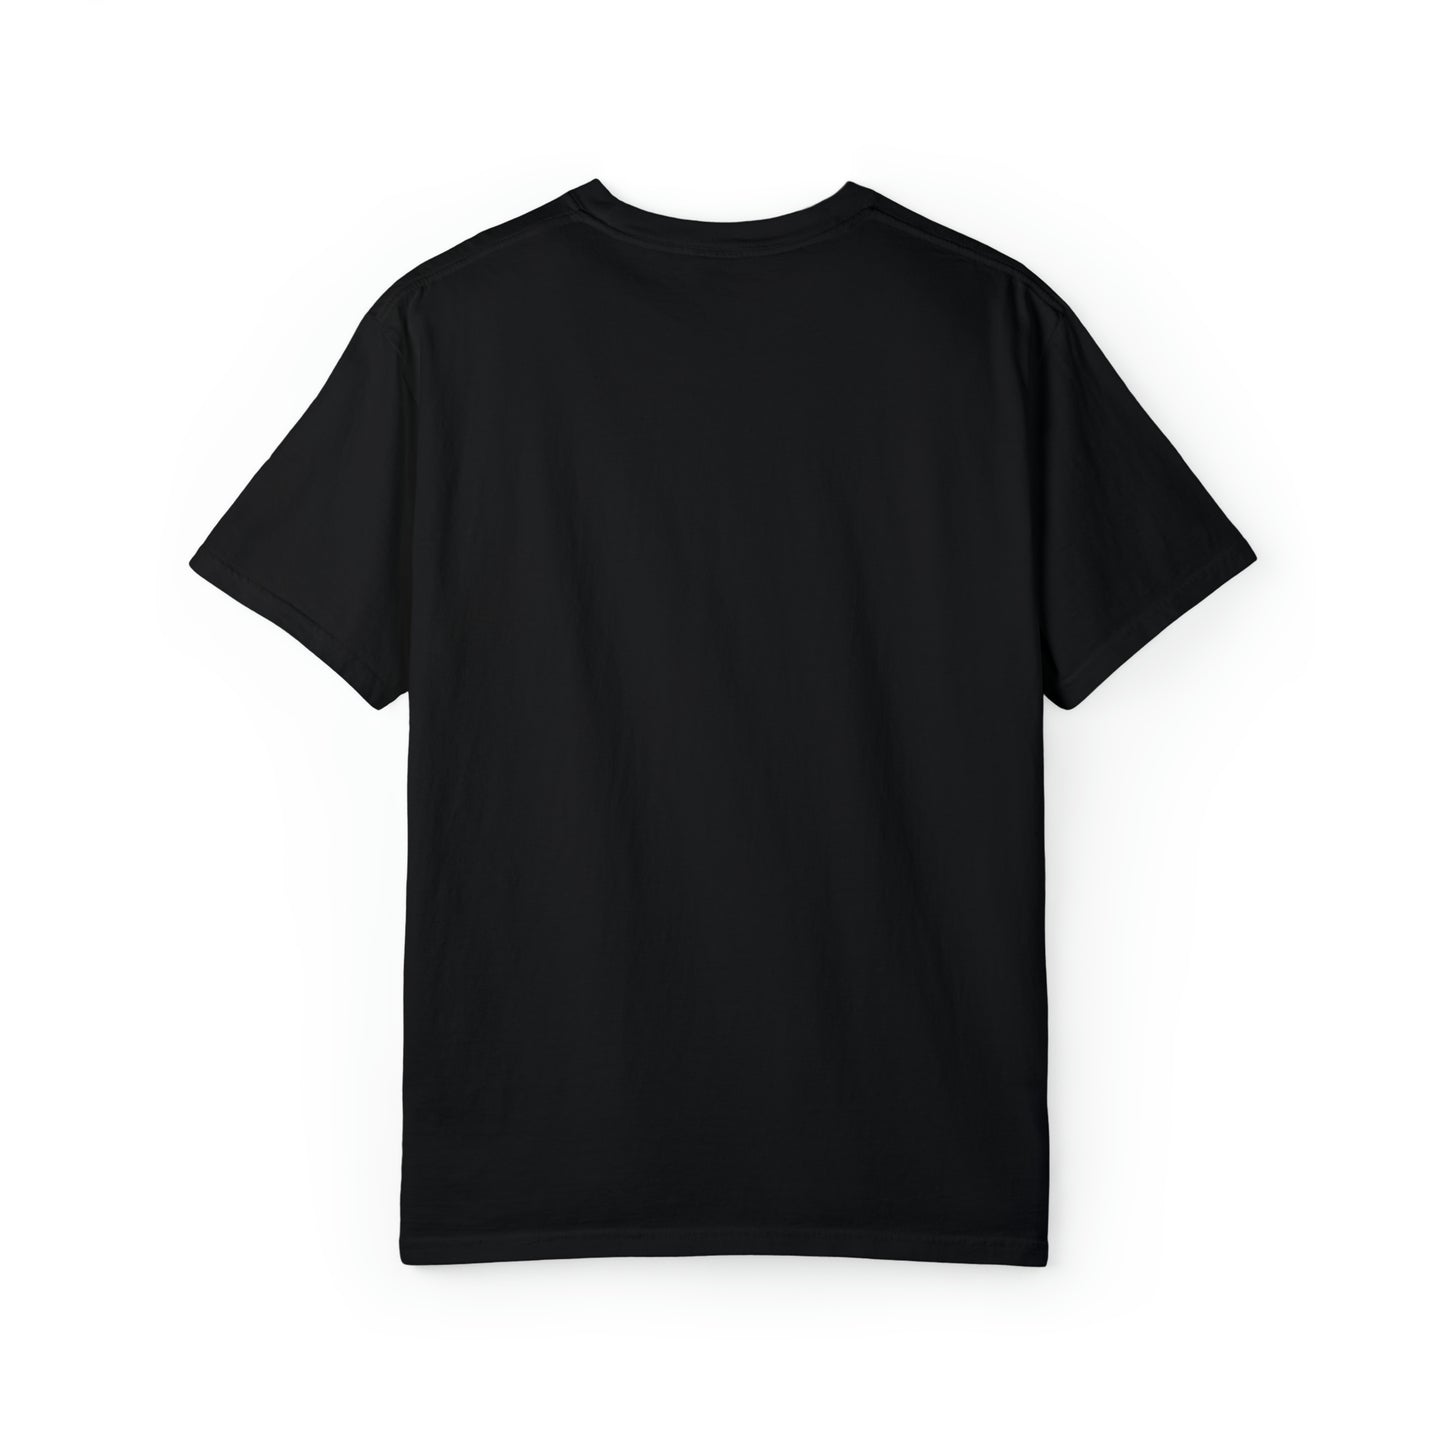 Christian T Shirt Grunge Black